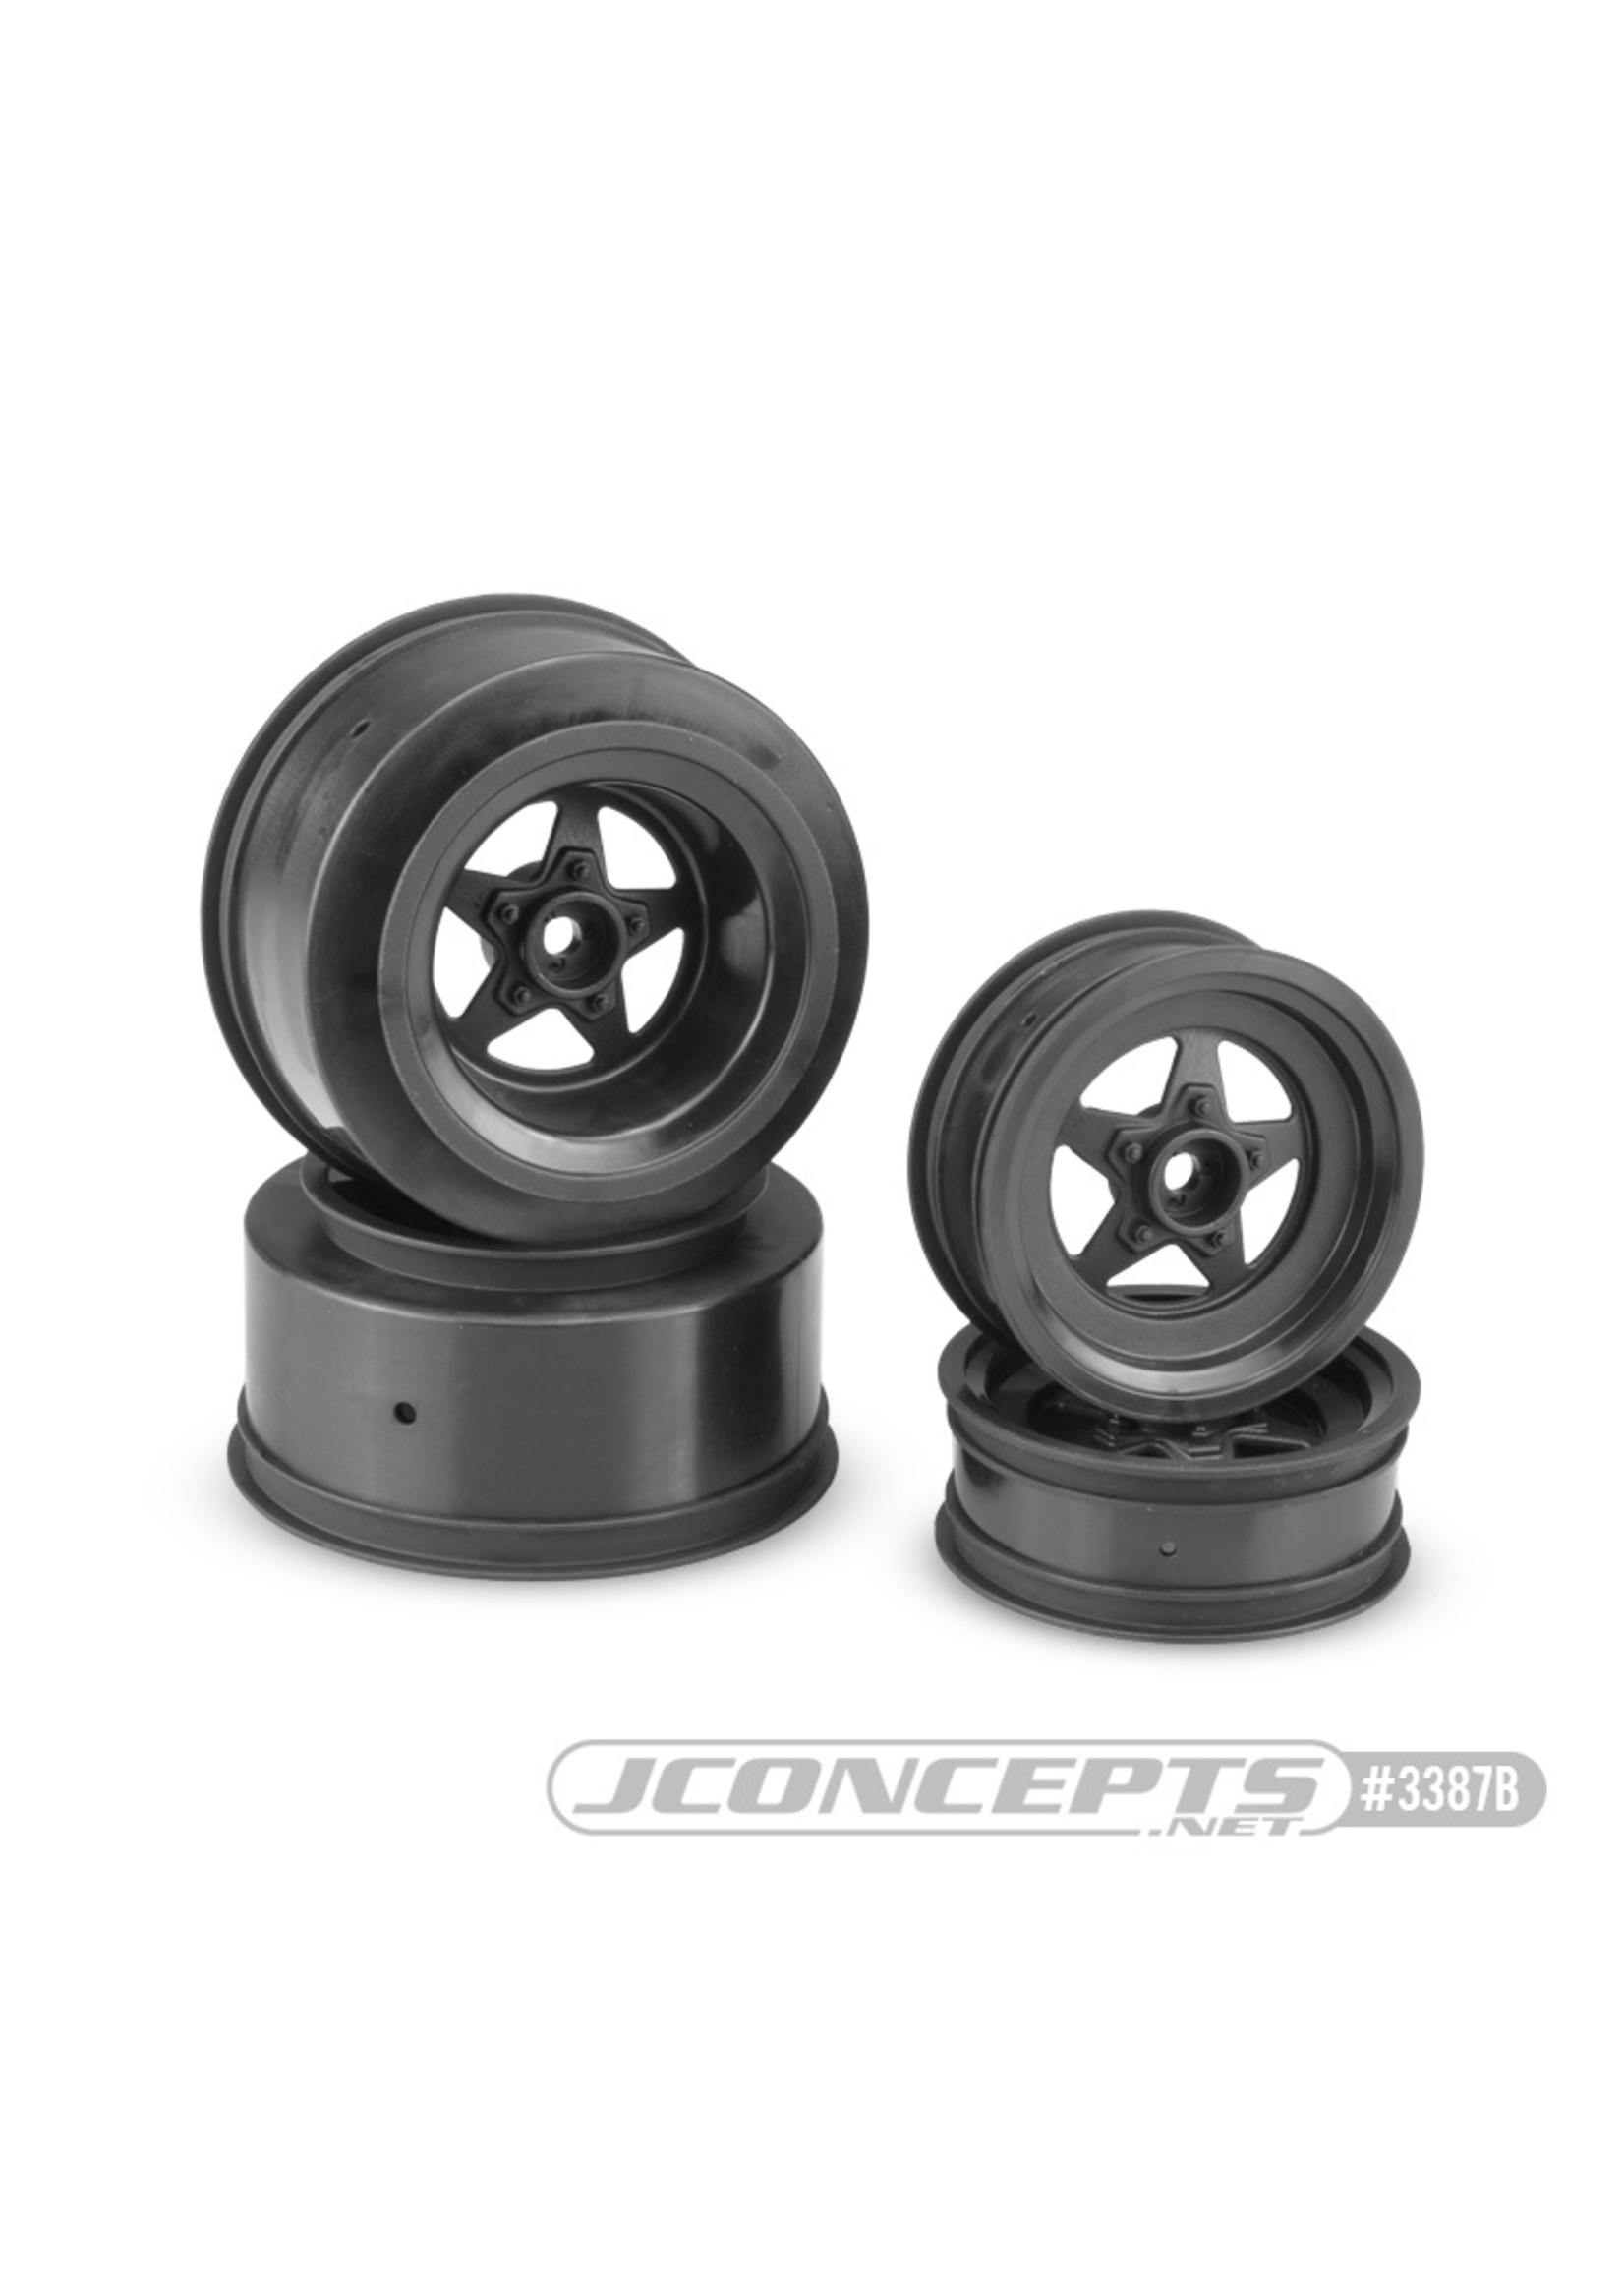 JConcepts JCO3387B - Startec Street Eliminator Wheels for Traxxas Slash and Bandit - Black